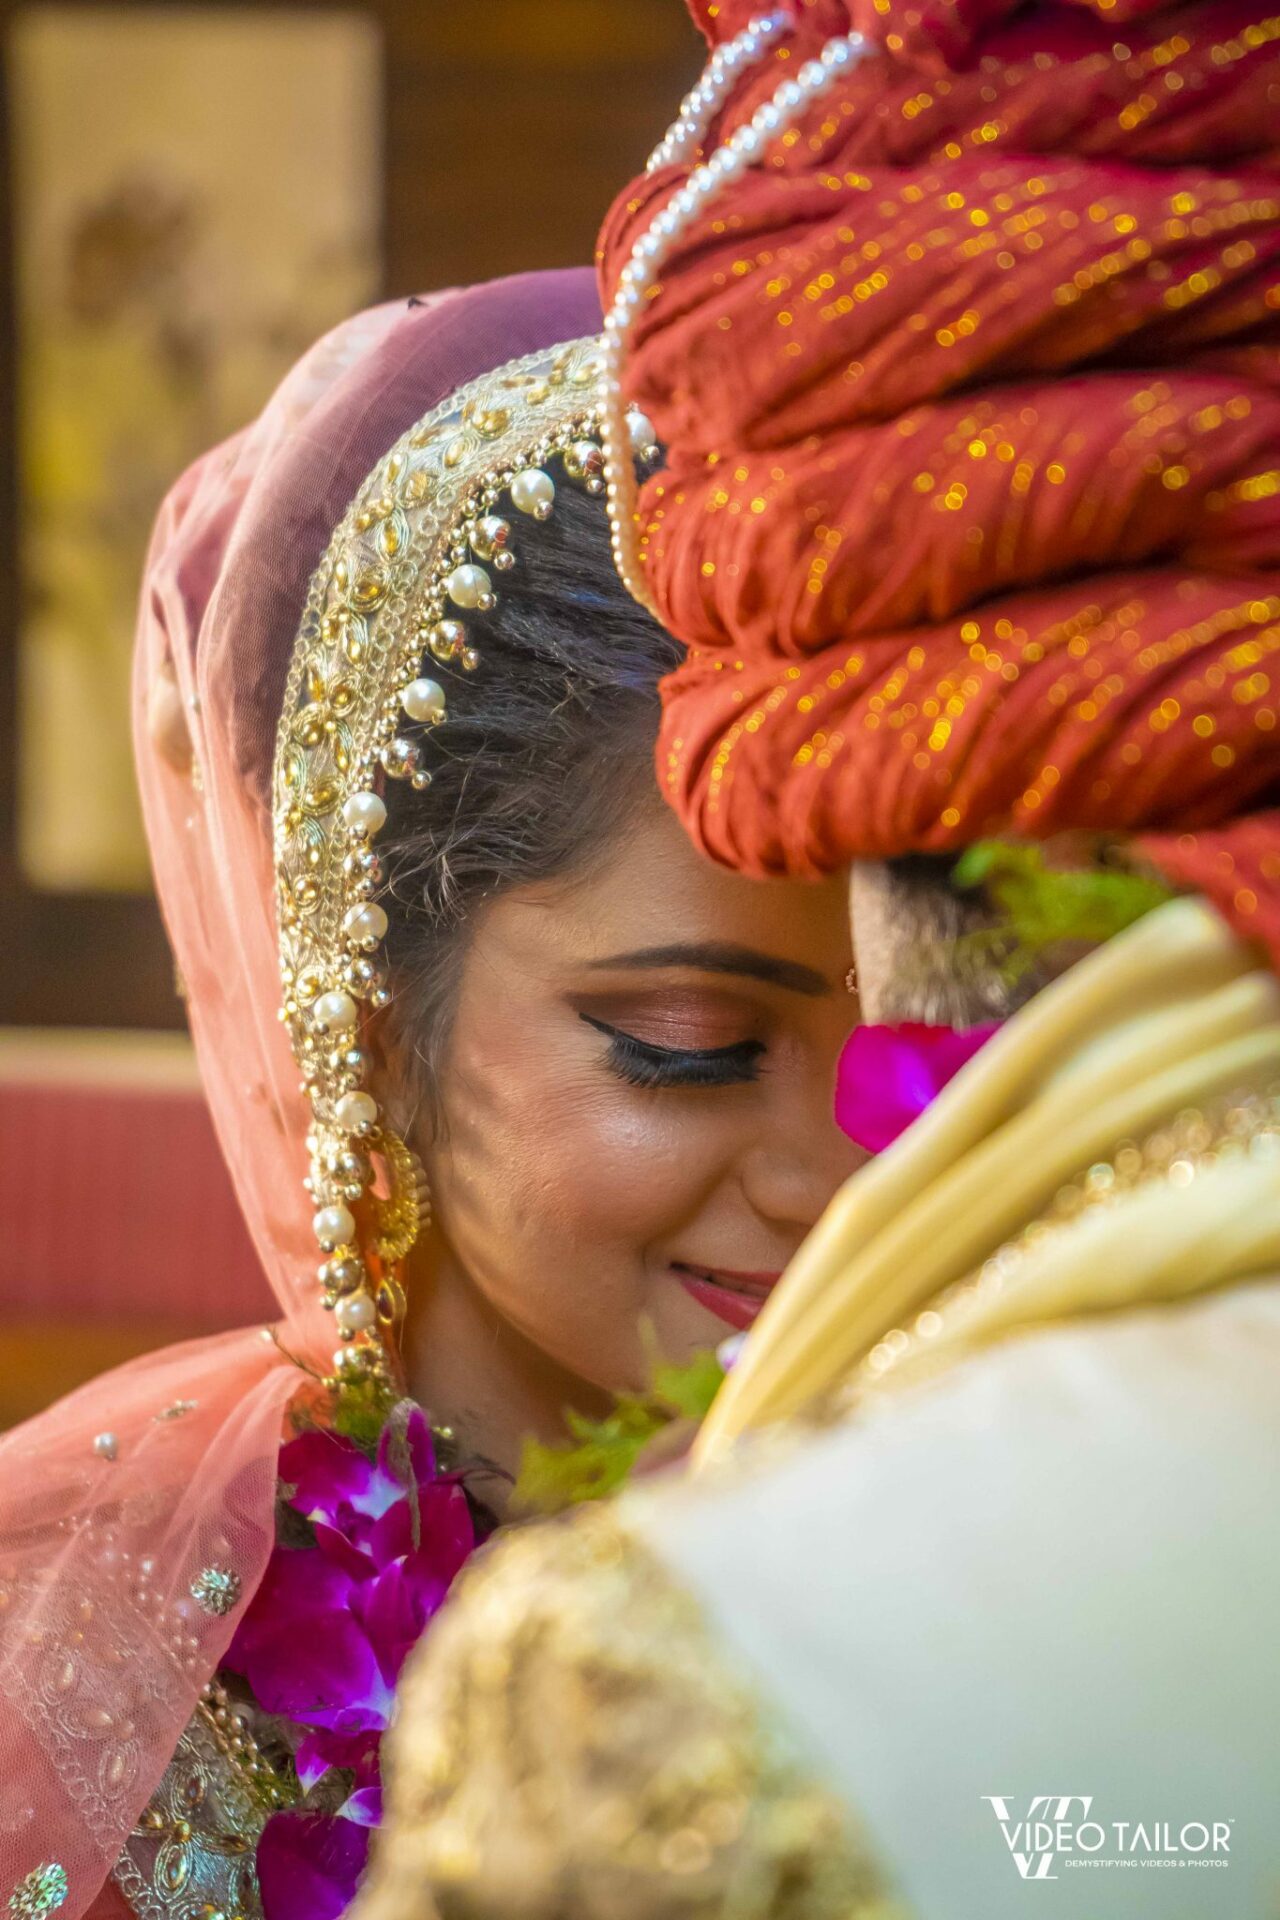 AI Art Generator: Indian wedding